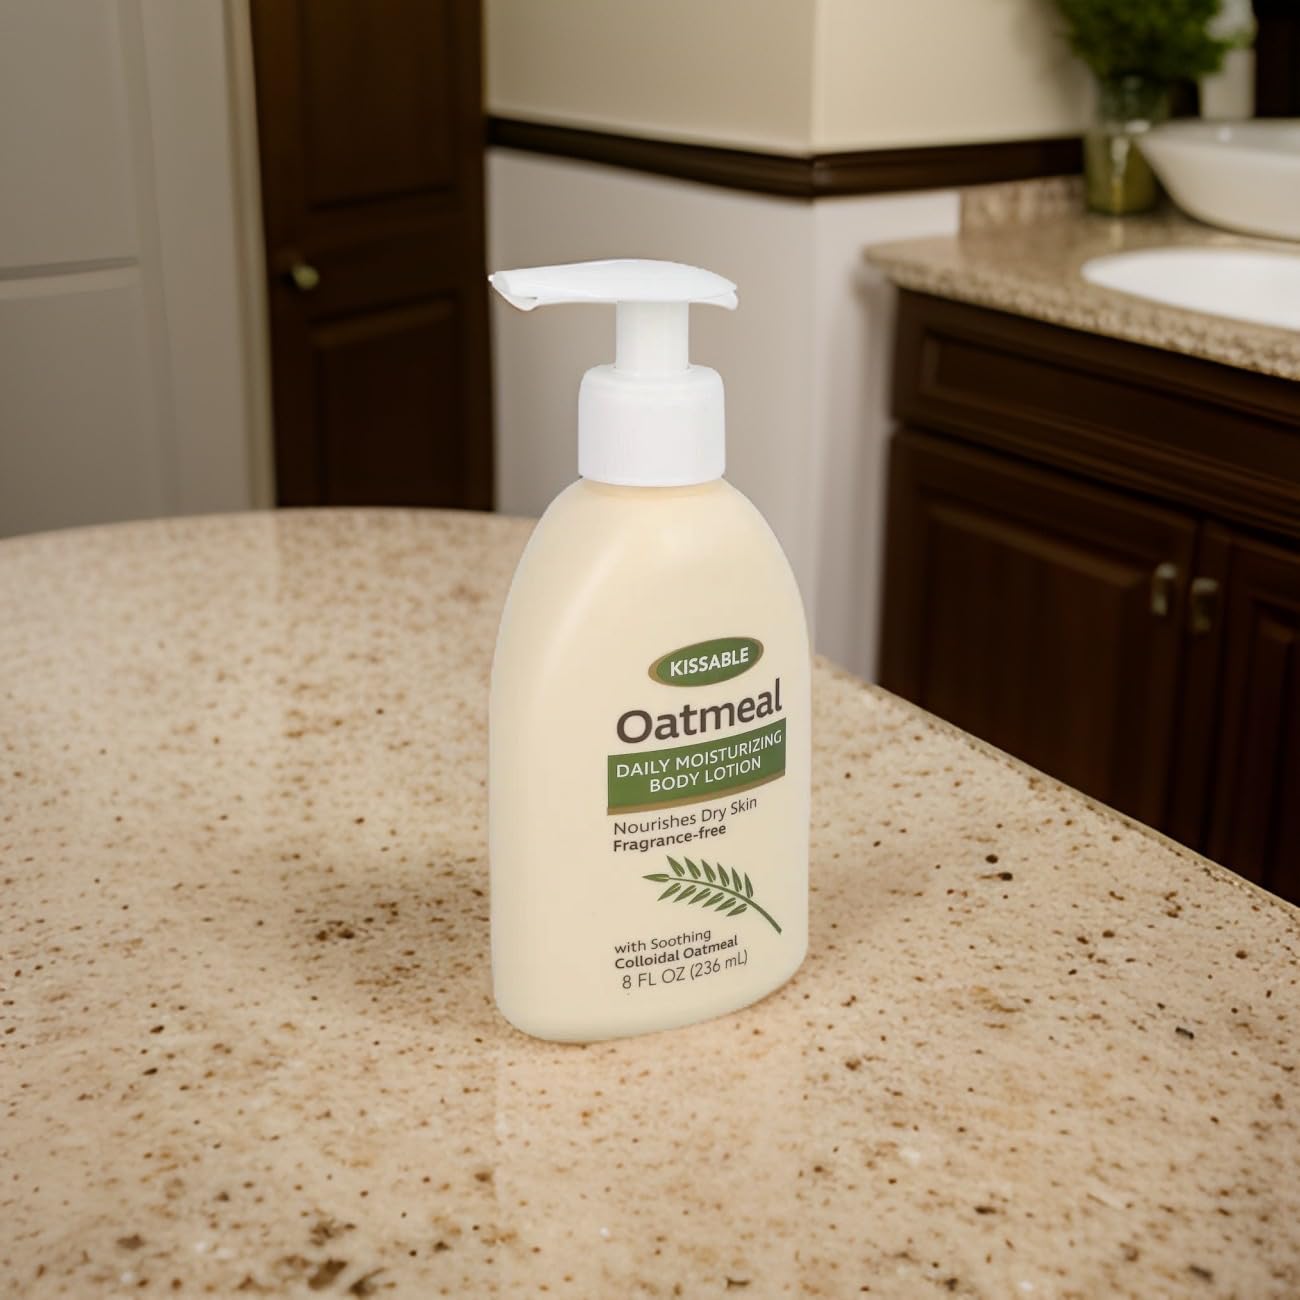 Kissable Oatmeal daily moisturizing Body Lotion Nourishes Dry Skin Fragrance-free 8 Fl oz